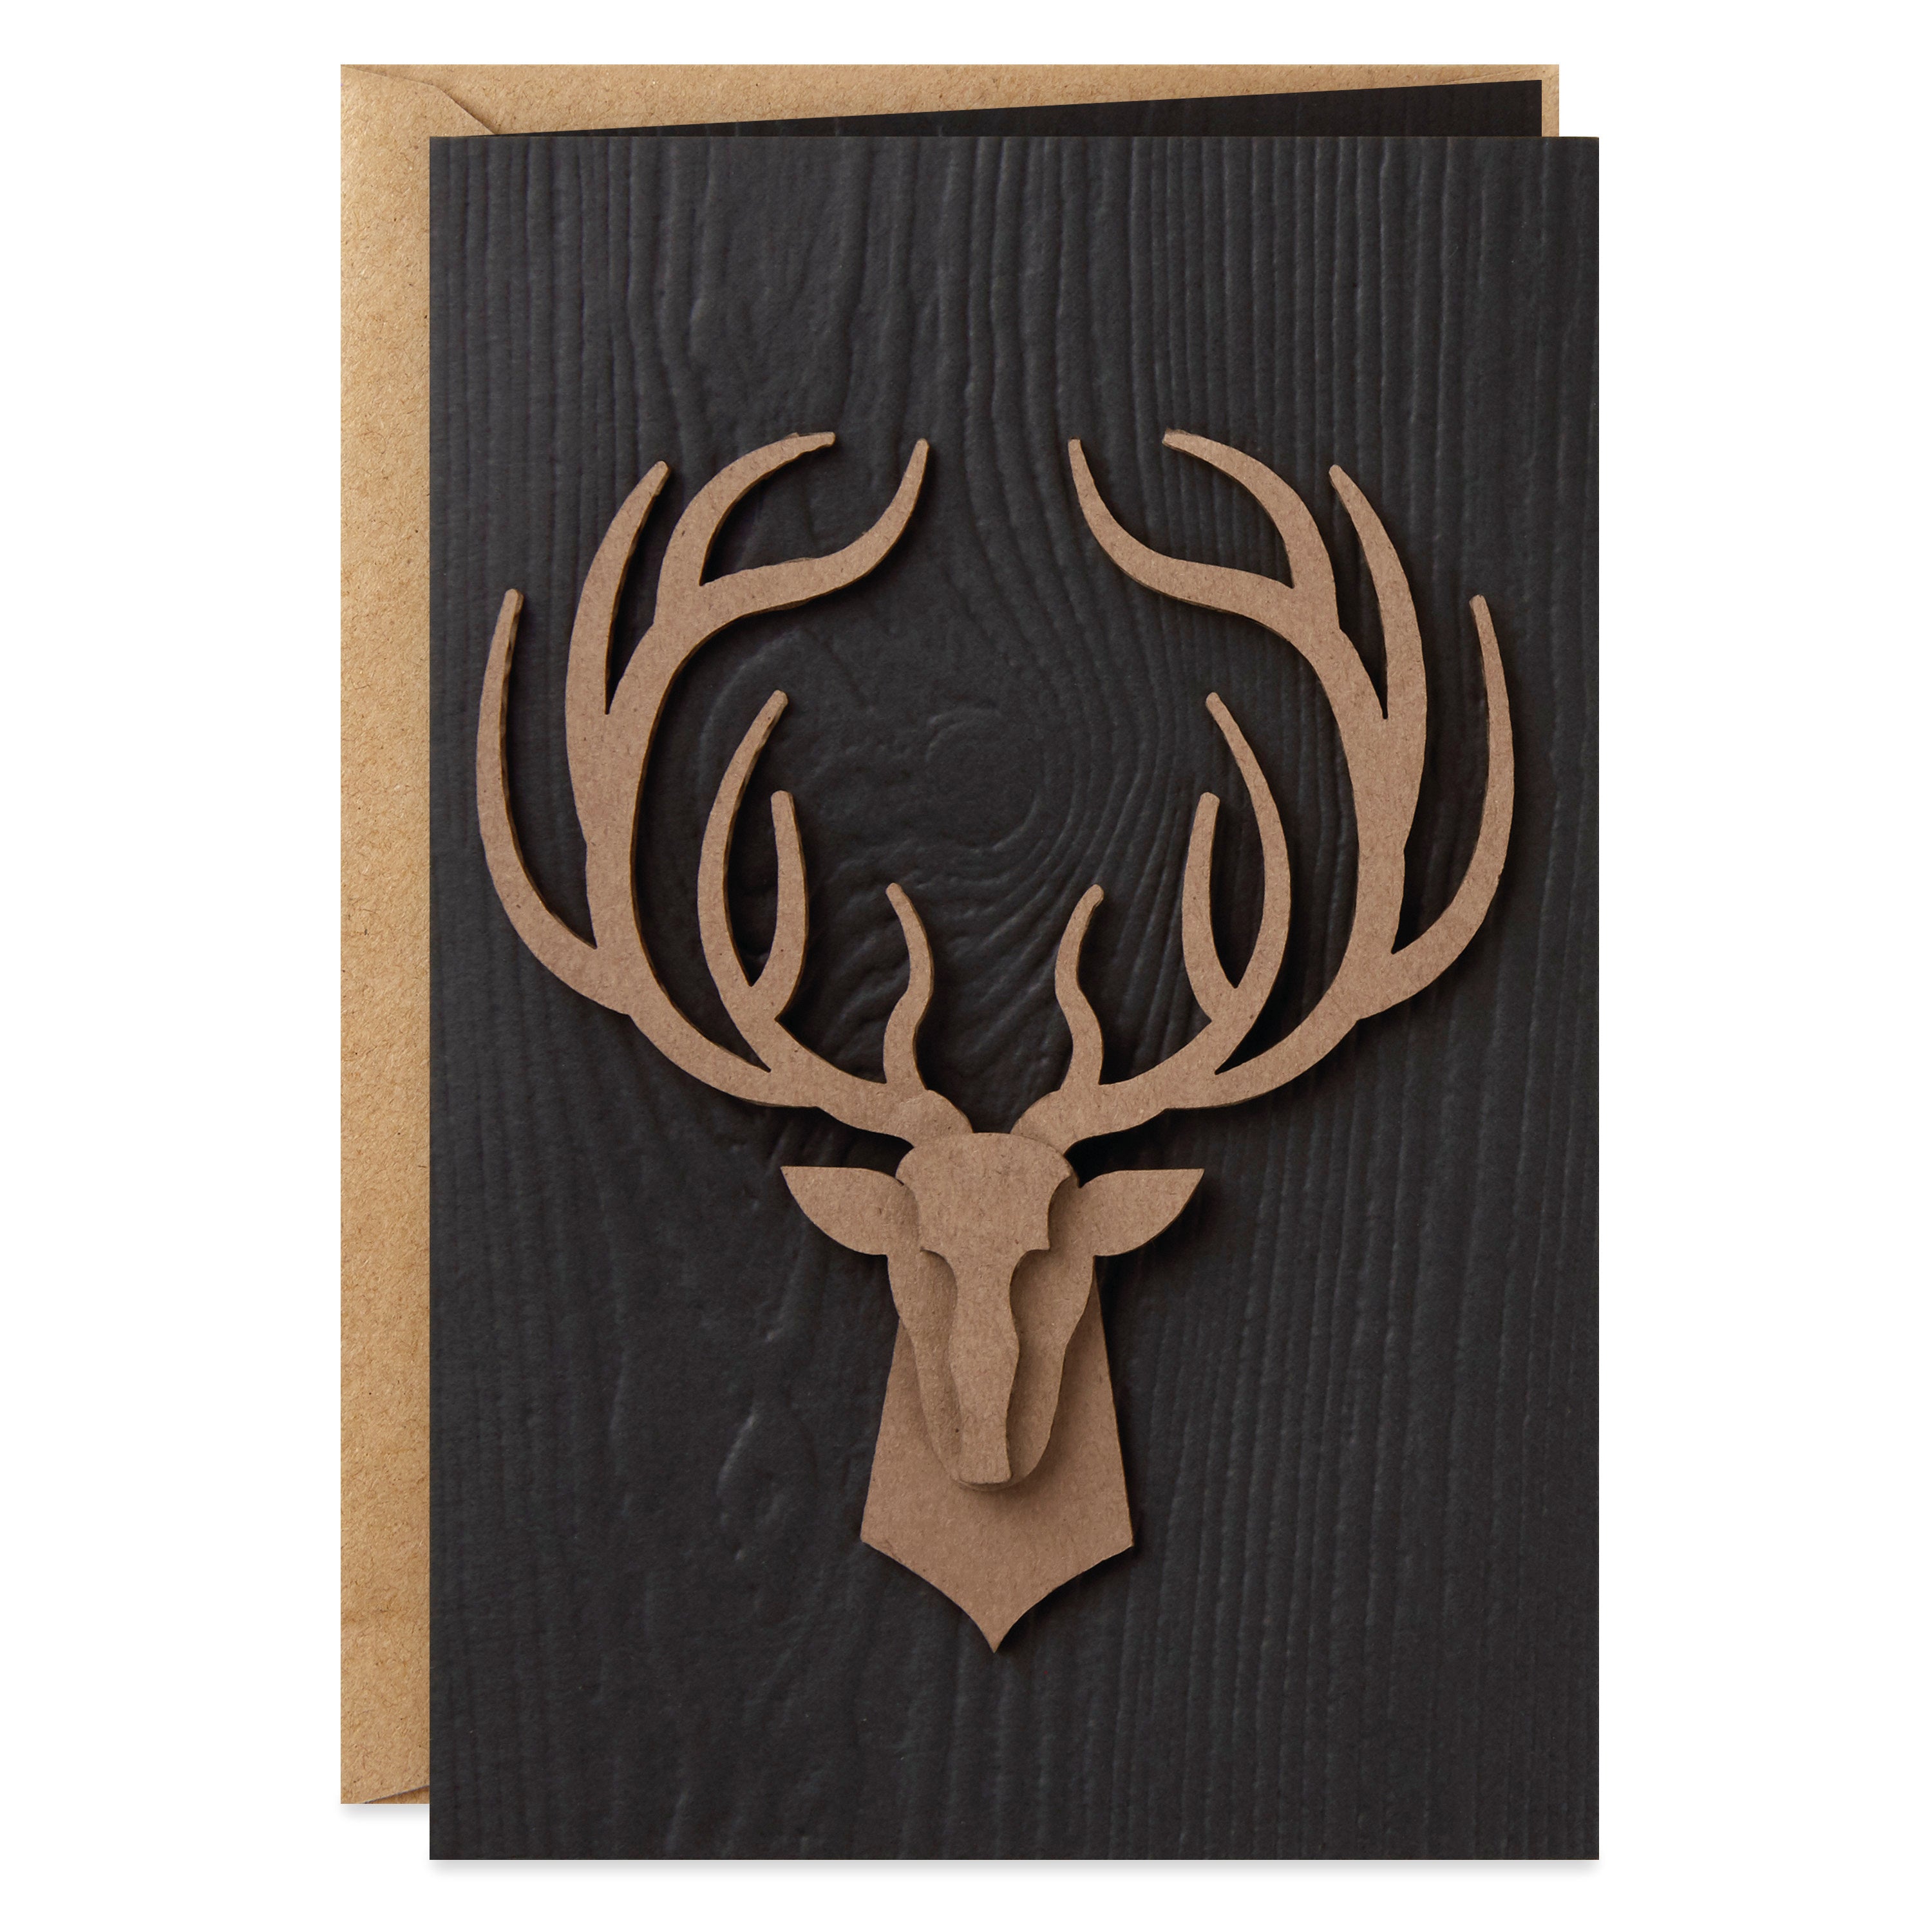 Signature Birthday Card for Men (Deer Head)